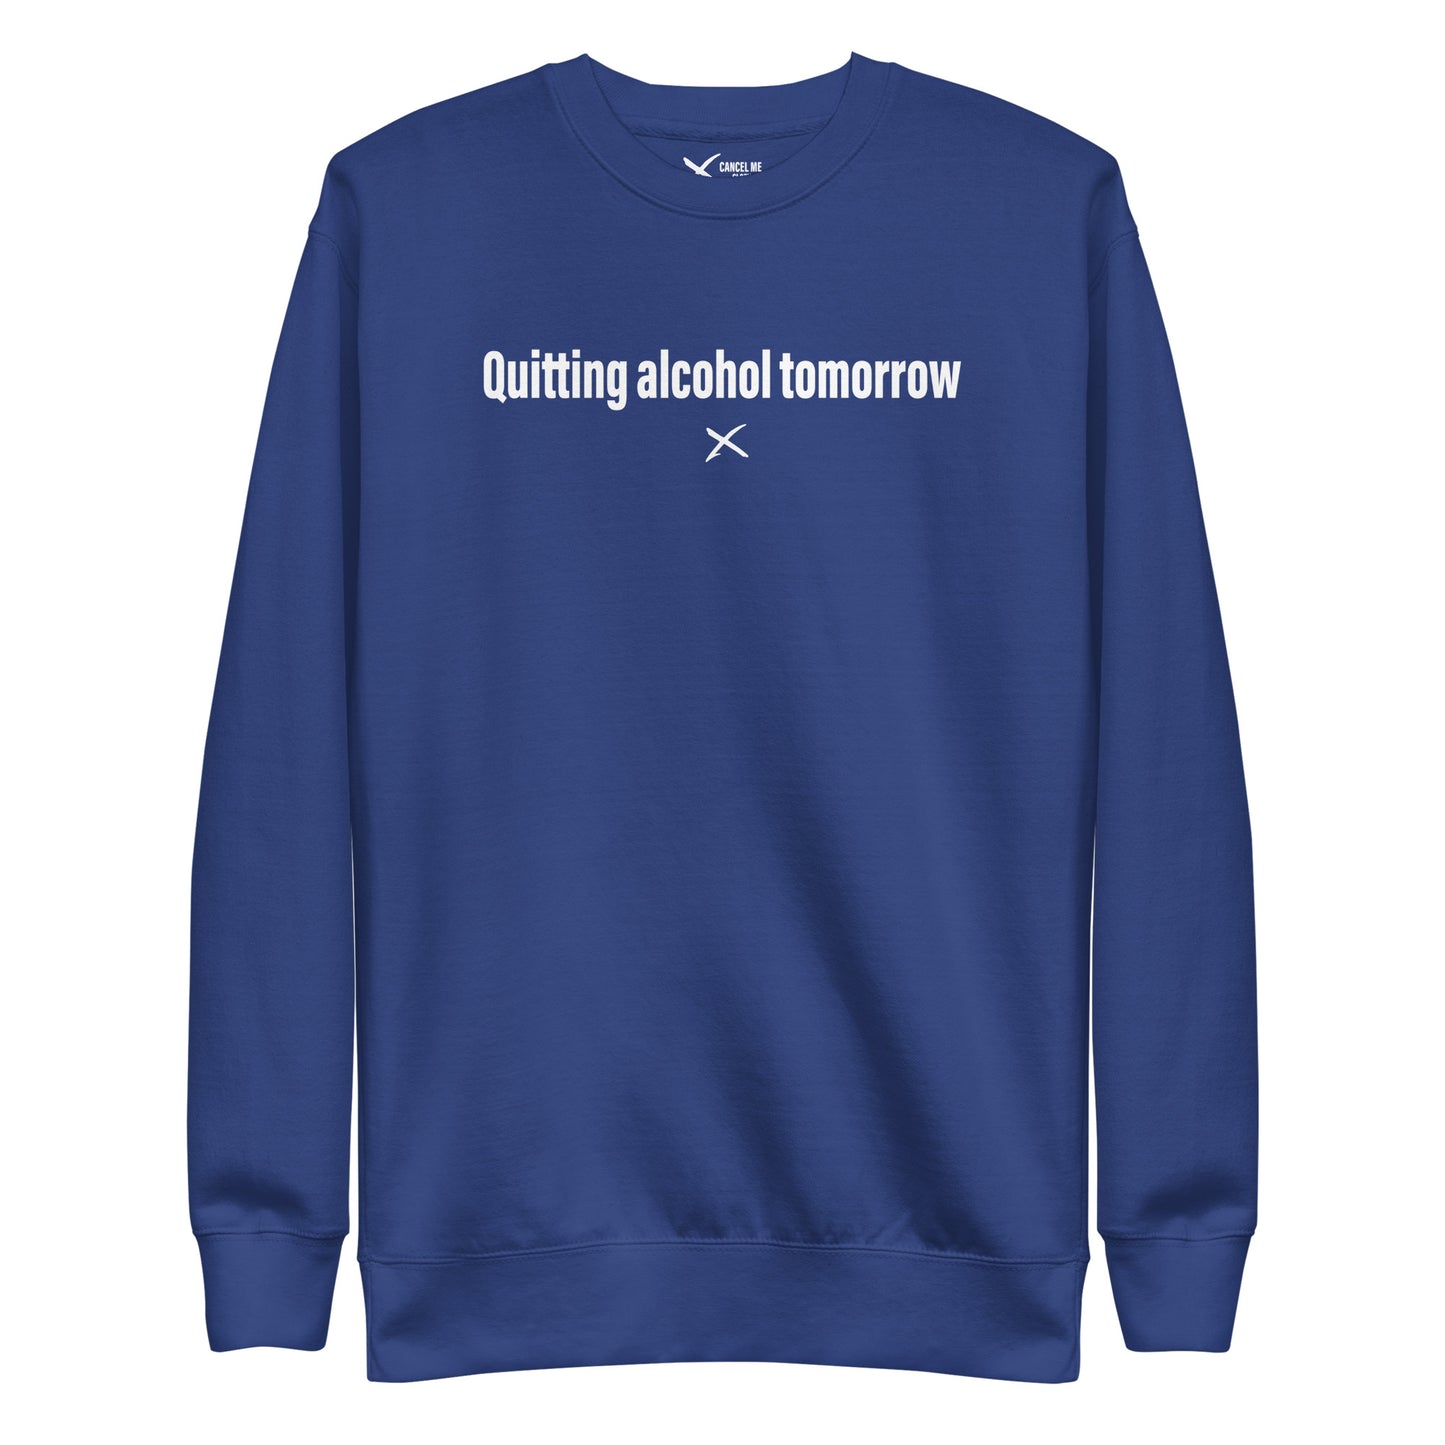 Quitting alcohol tomorrow - Sweatshirt